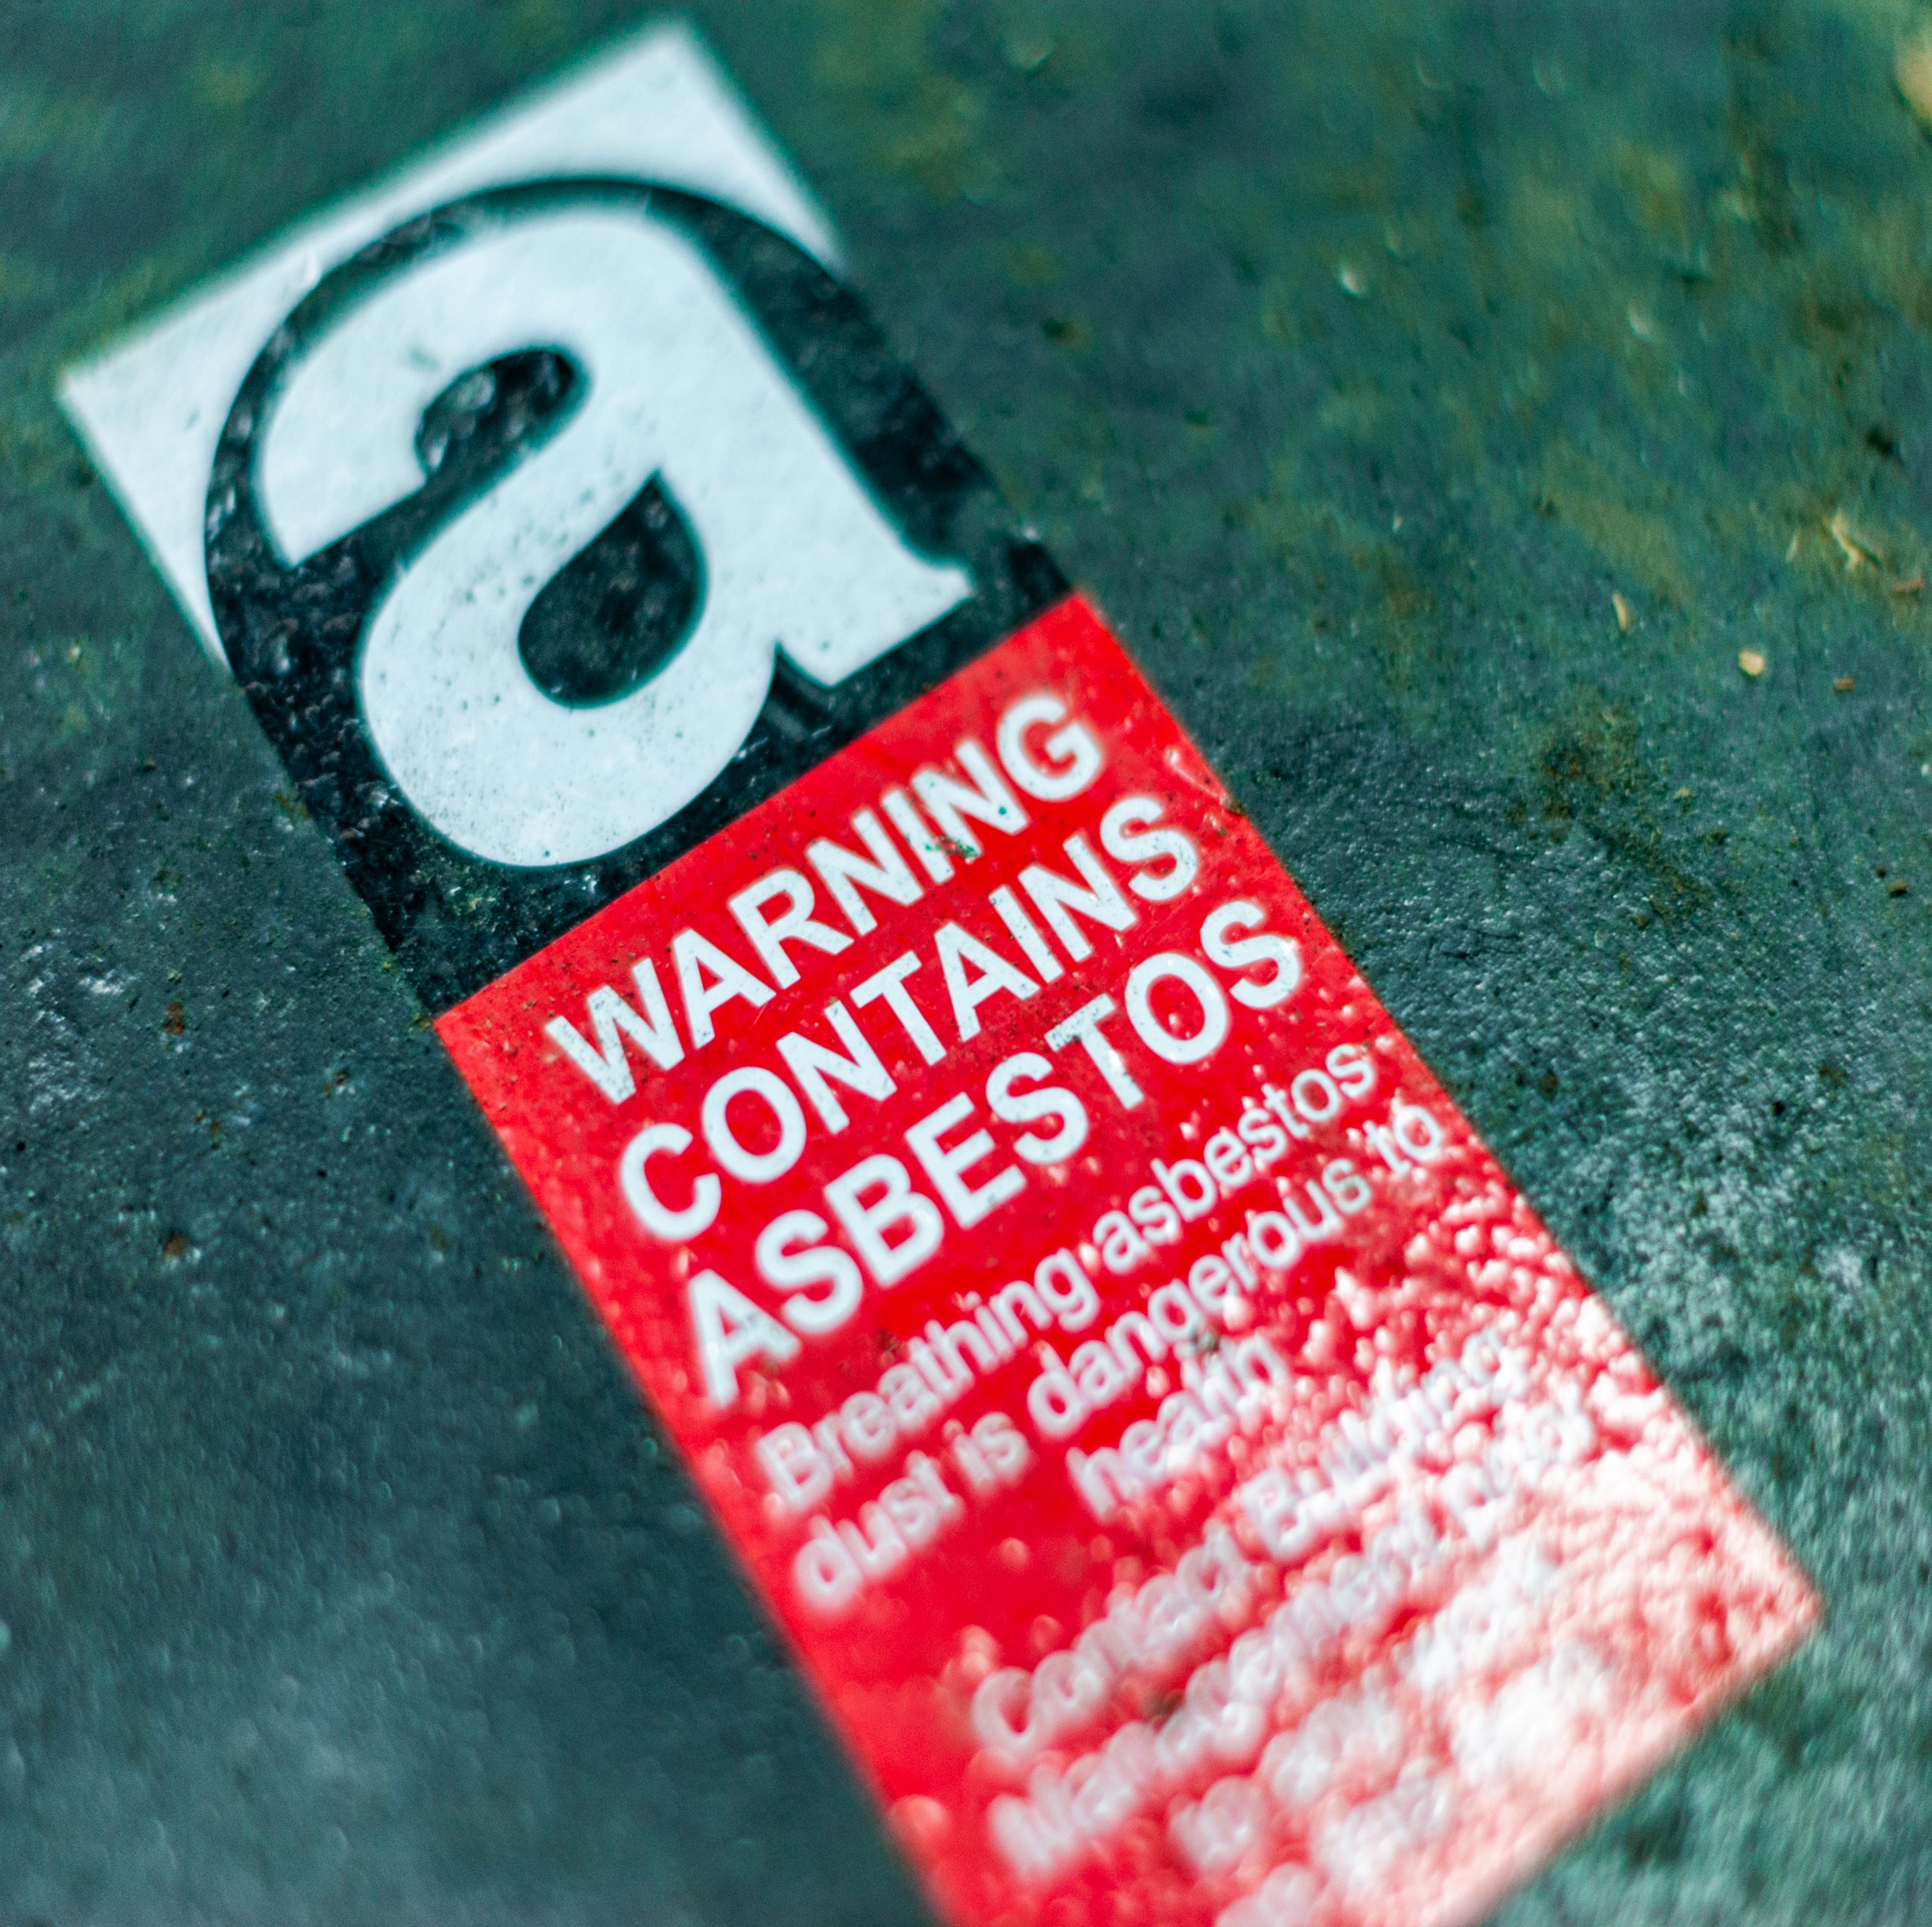 Asbestos Warning 2